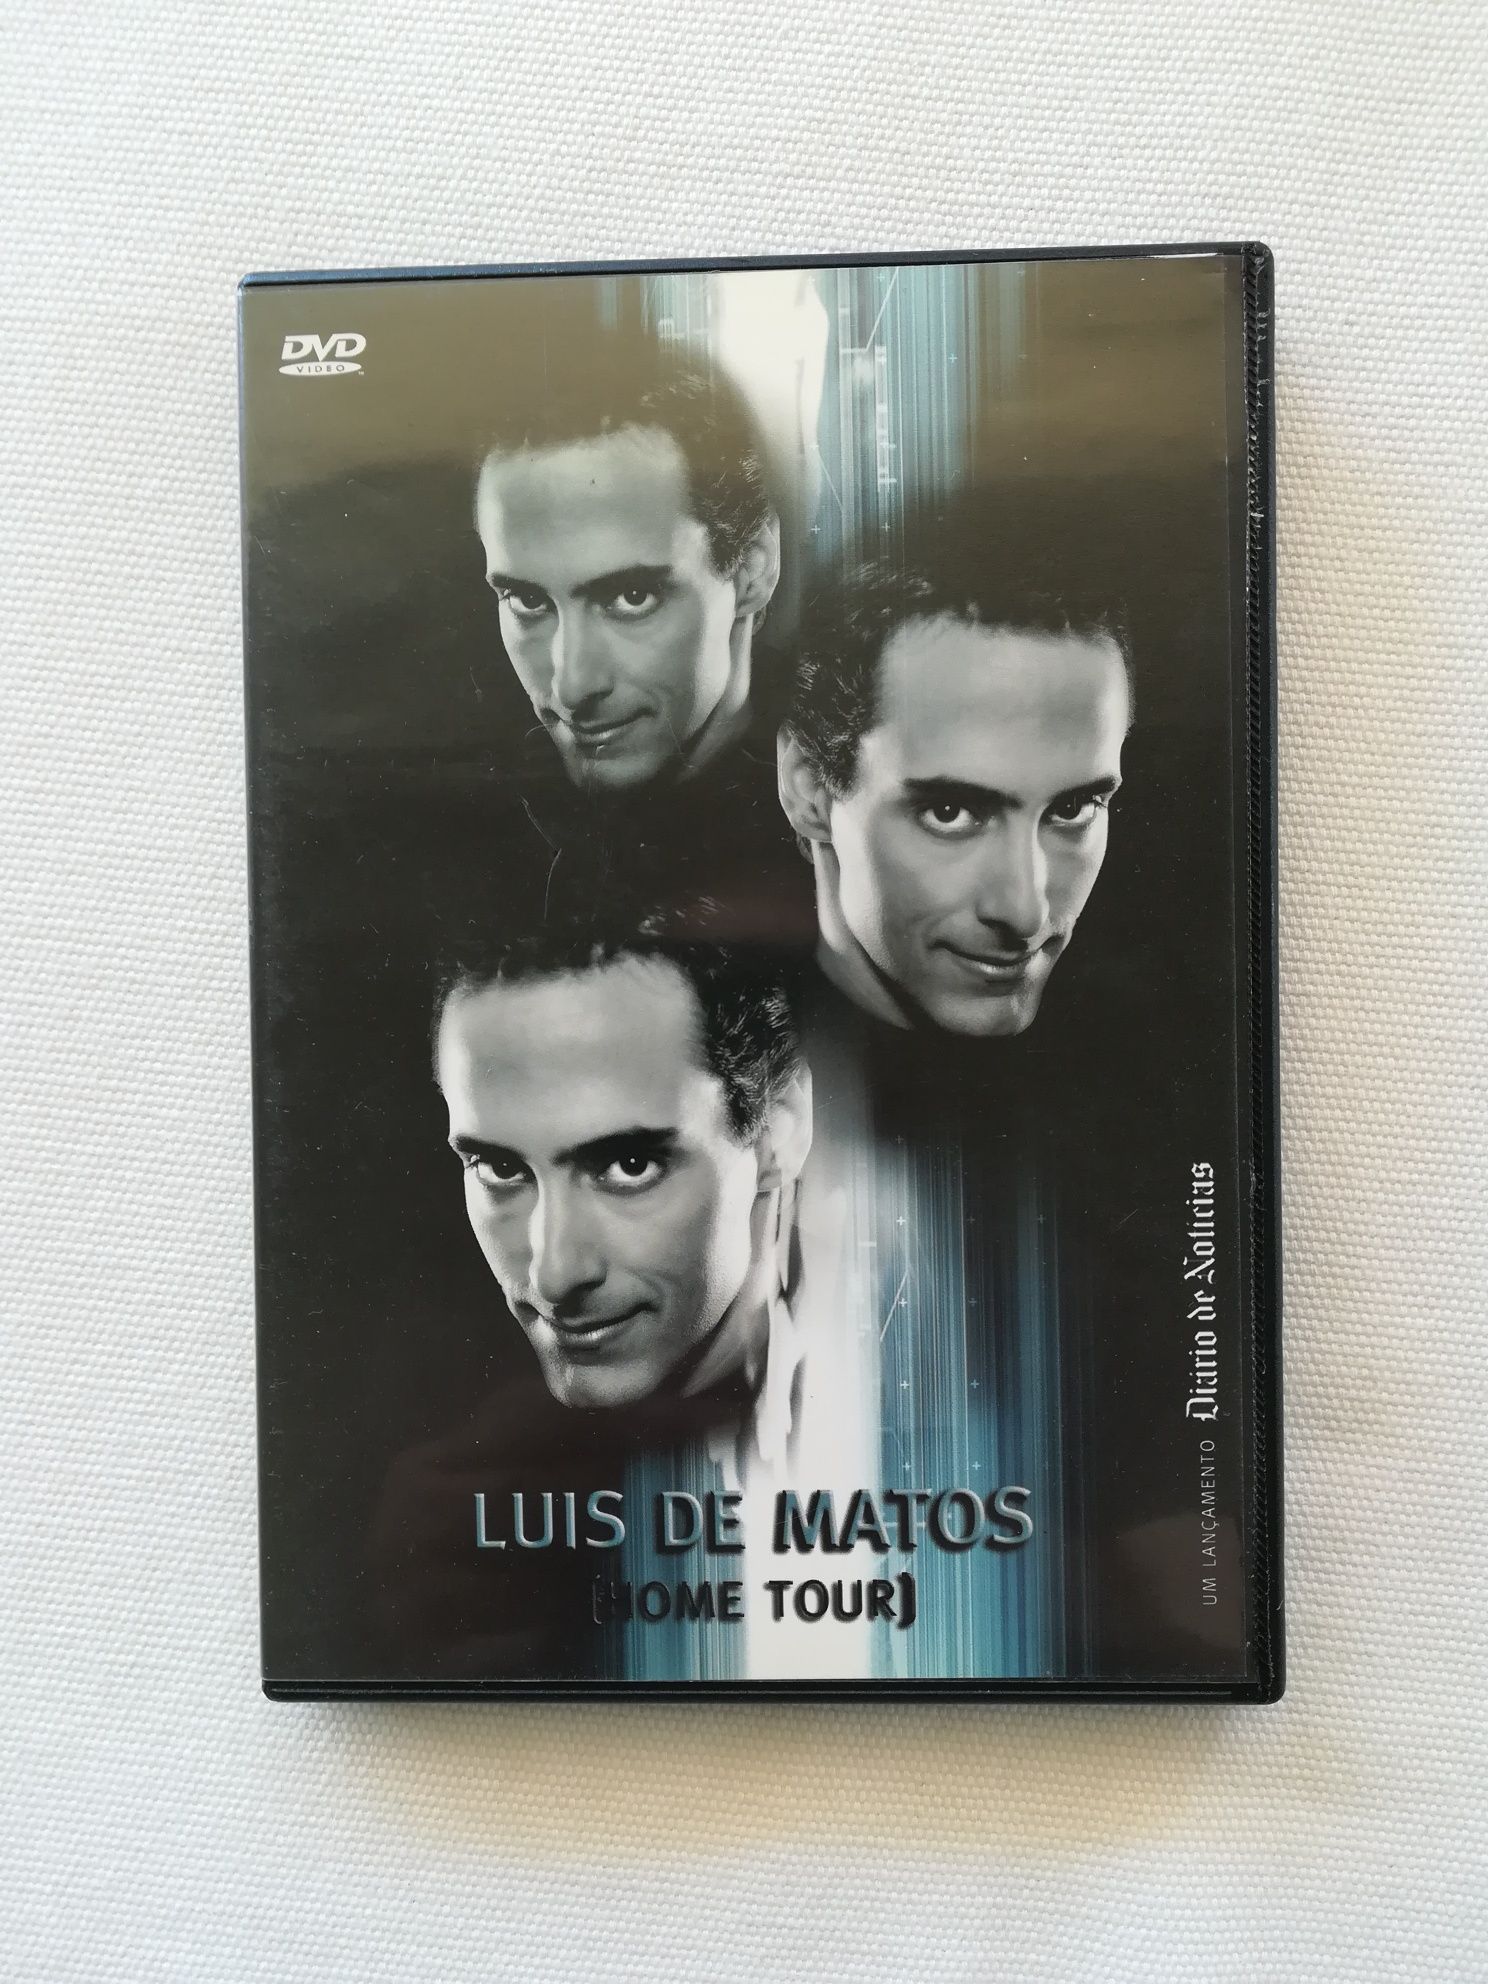 Luís de Matos Home tour DVD